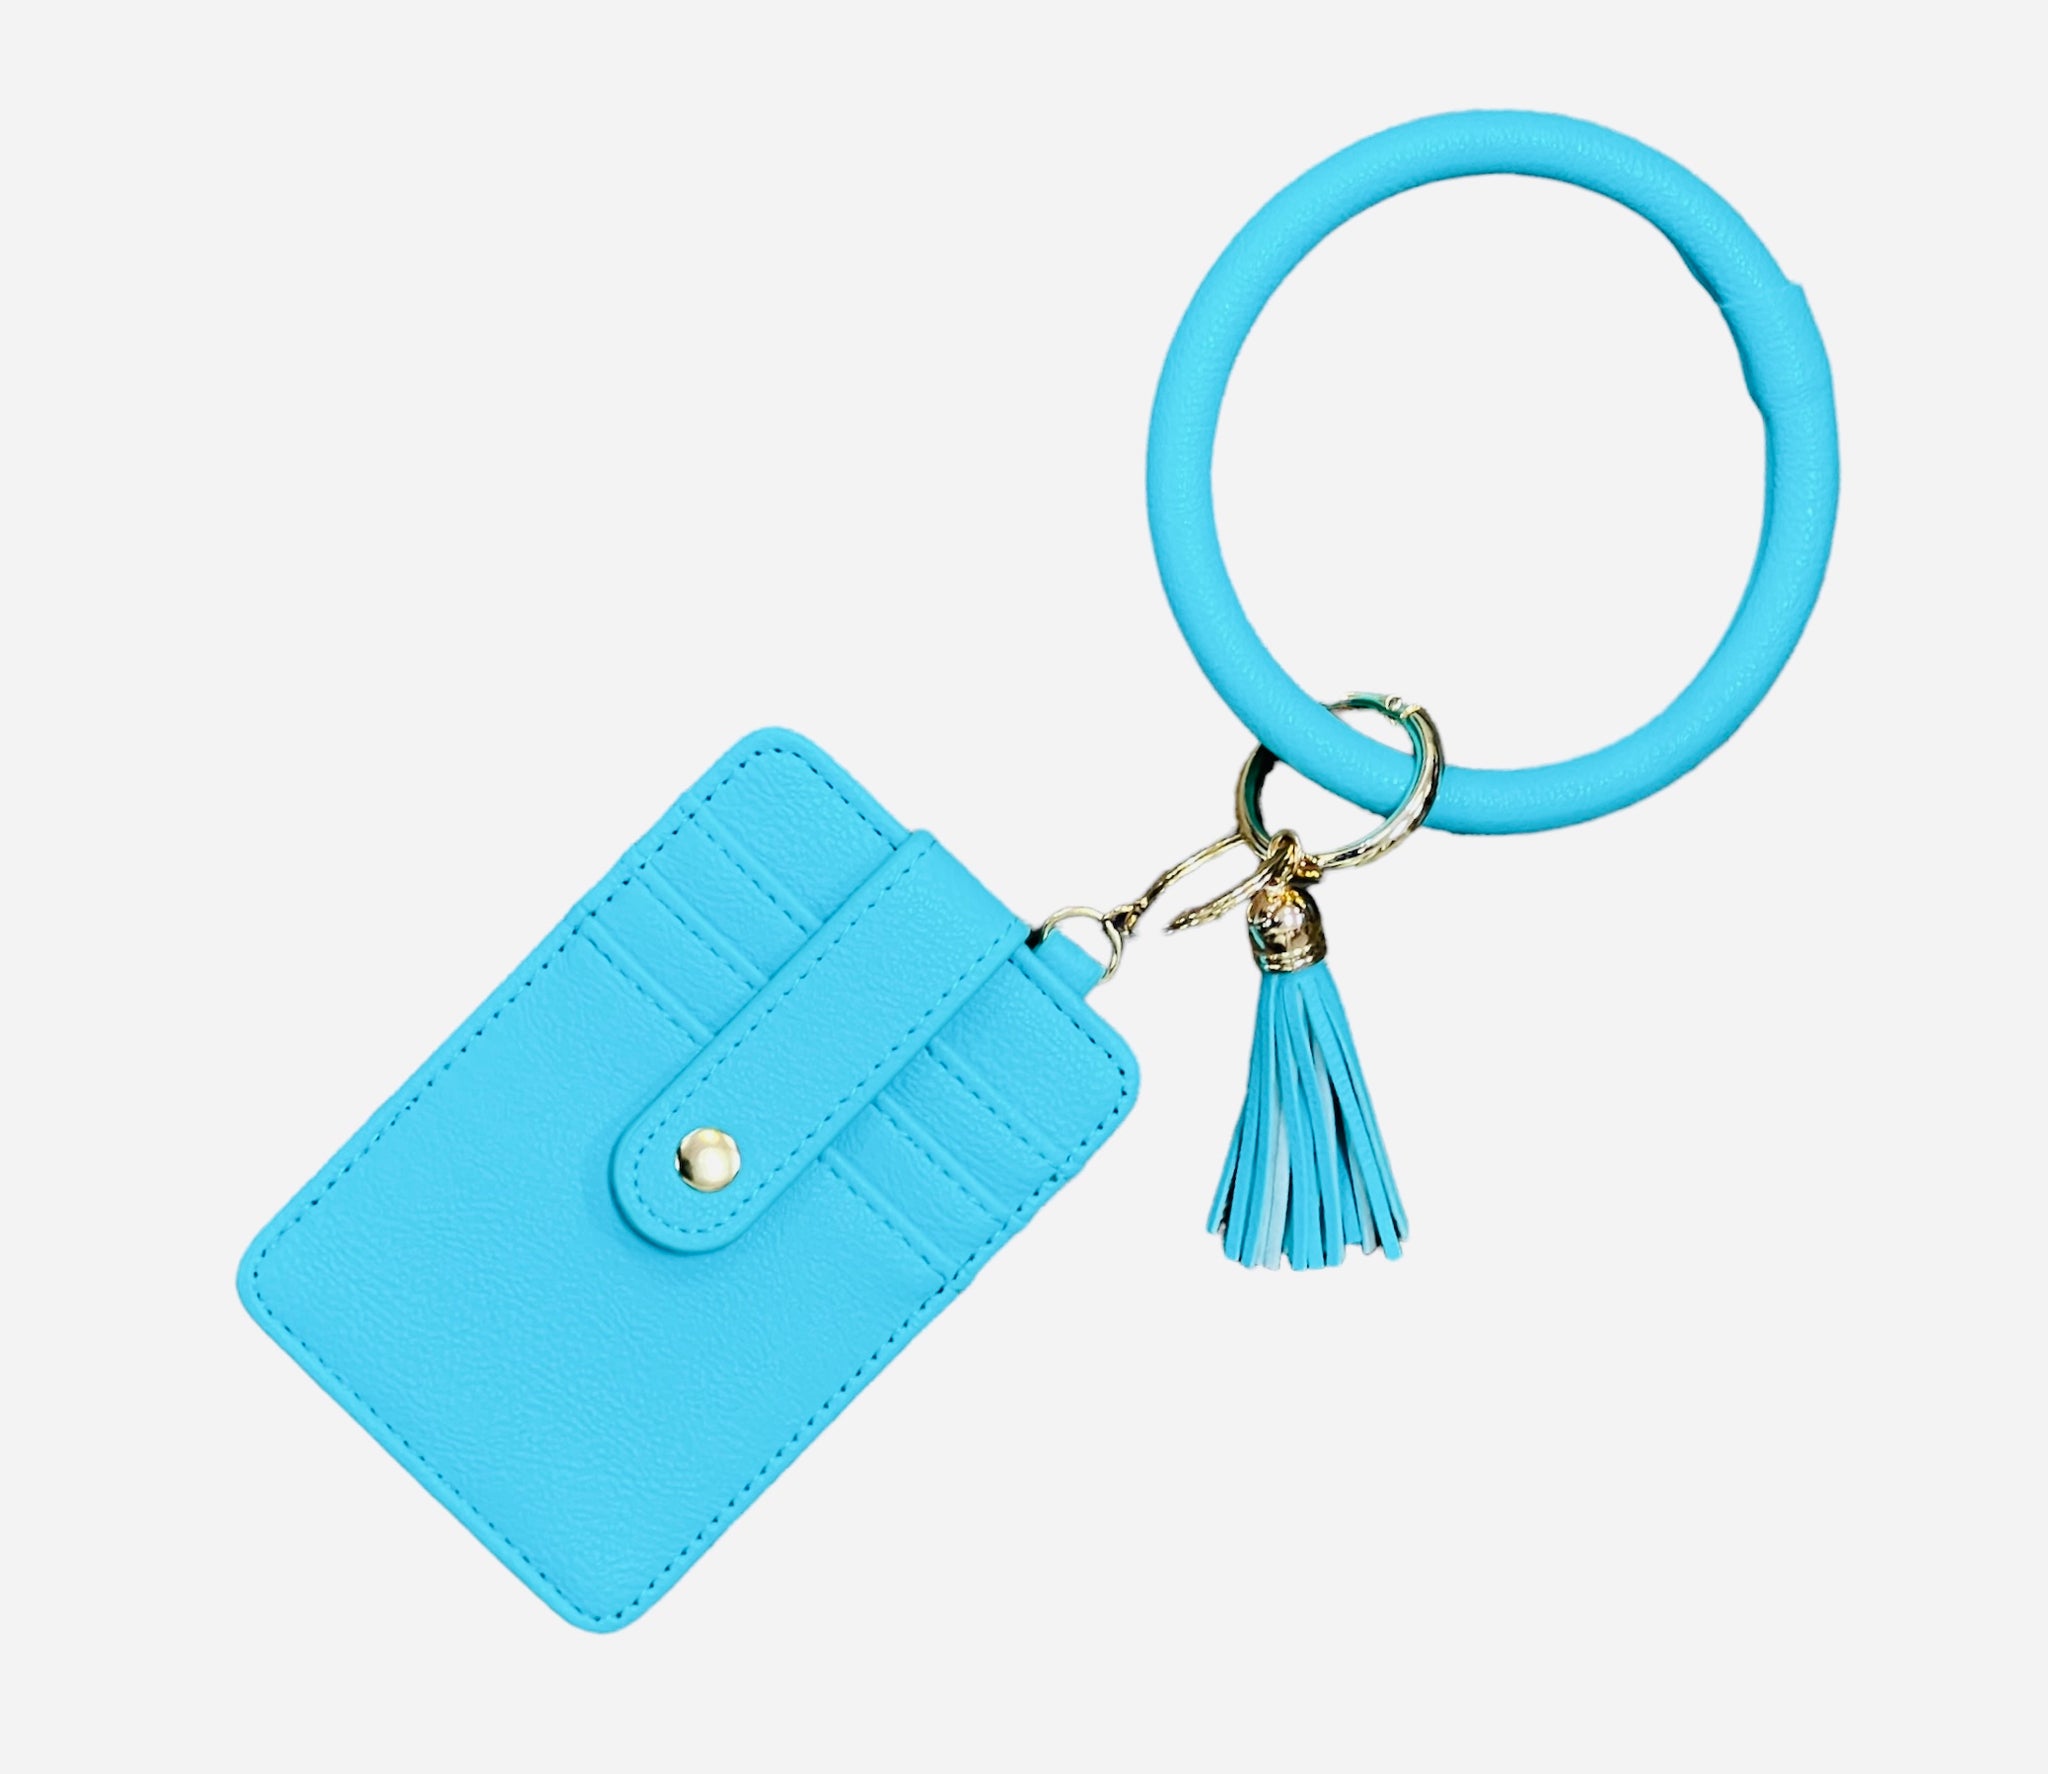 Tiffany Blue Wallet and Bangle Keychain